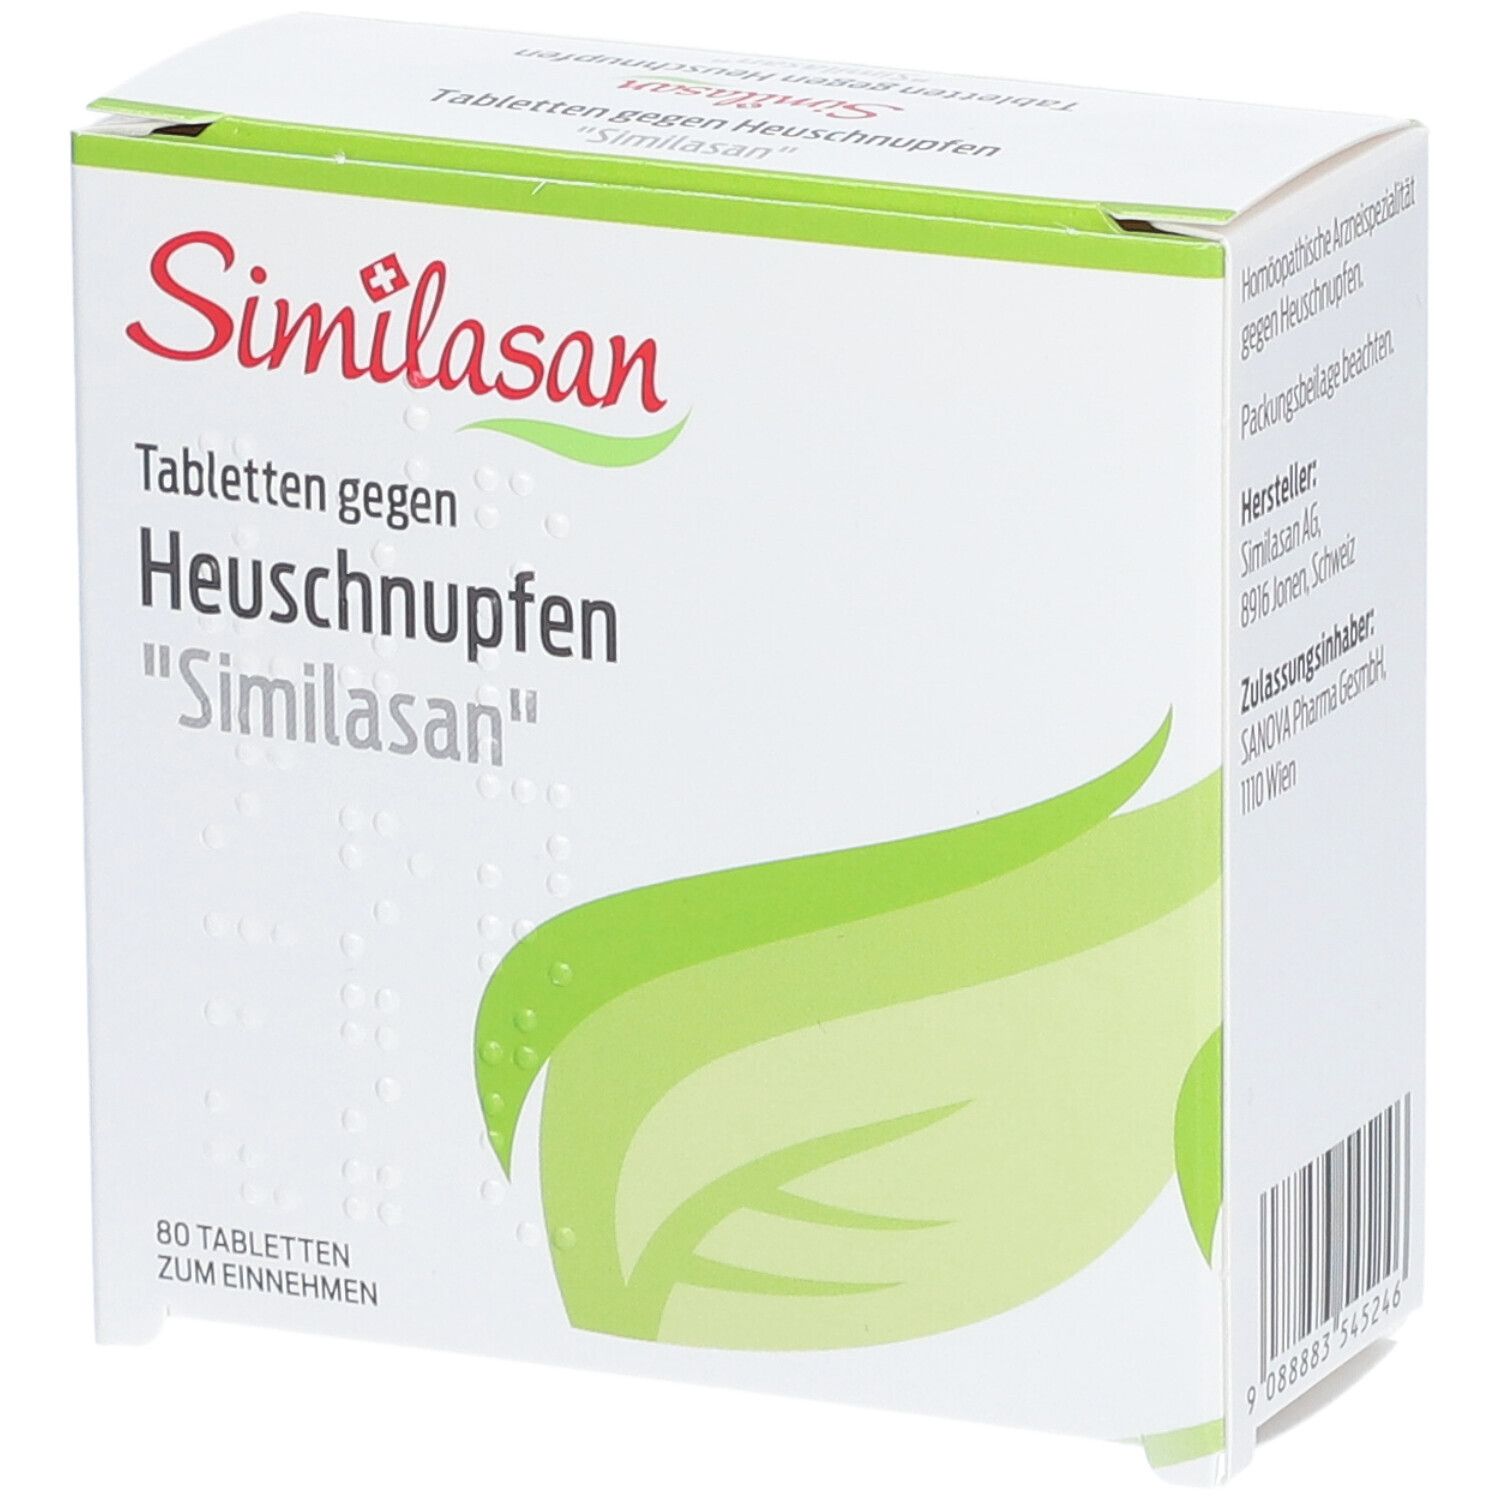 Tabletten gegen Heuschnupfen Similasan